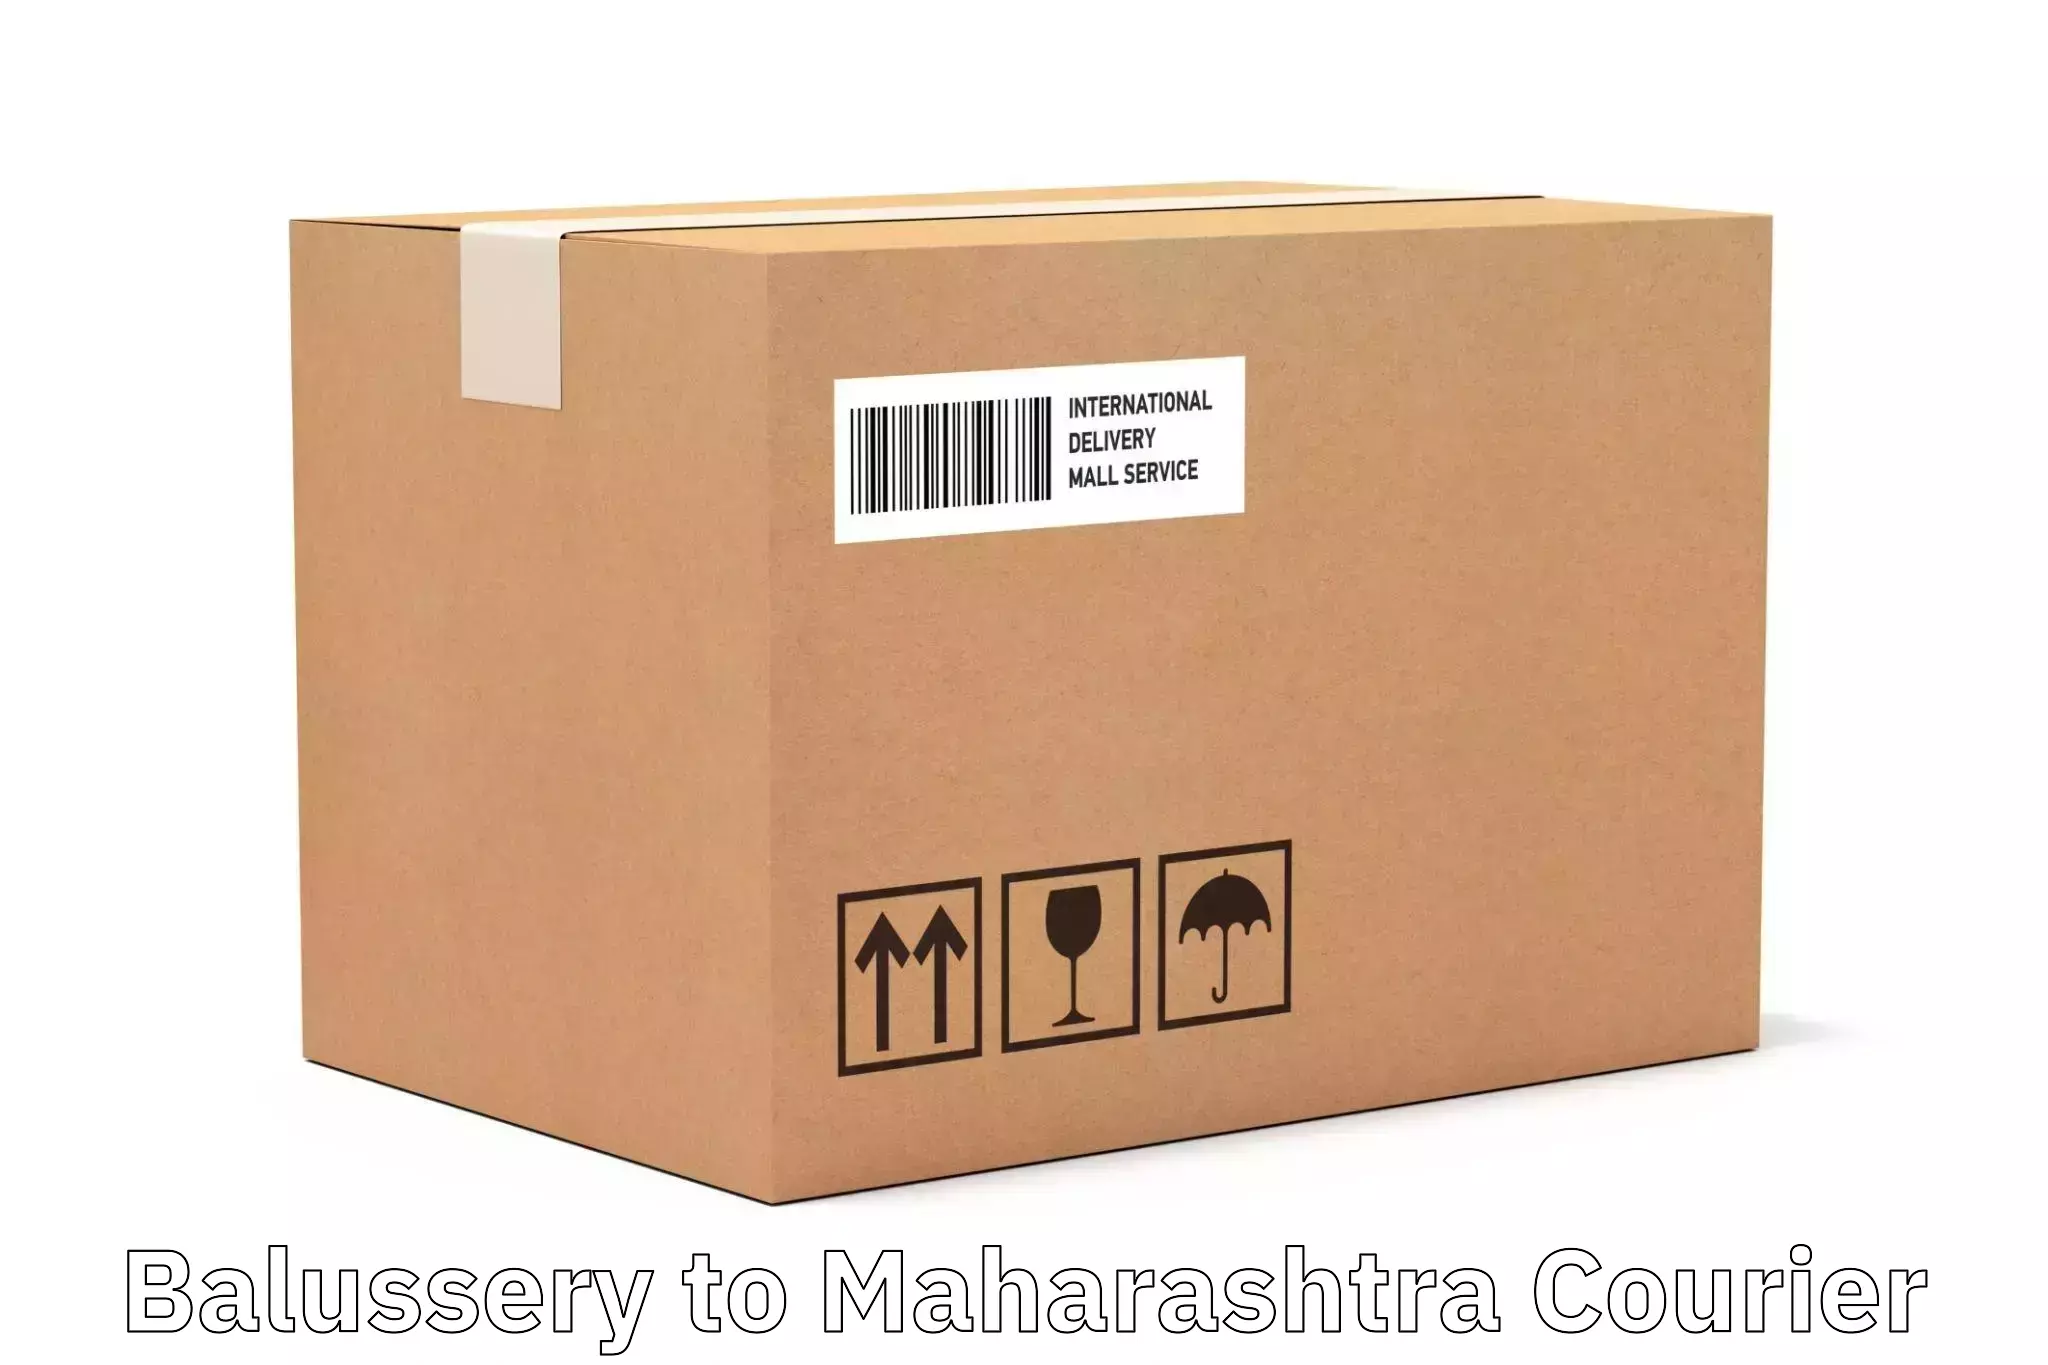 Enhanced tracking features Balussery to Maharashtra